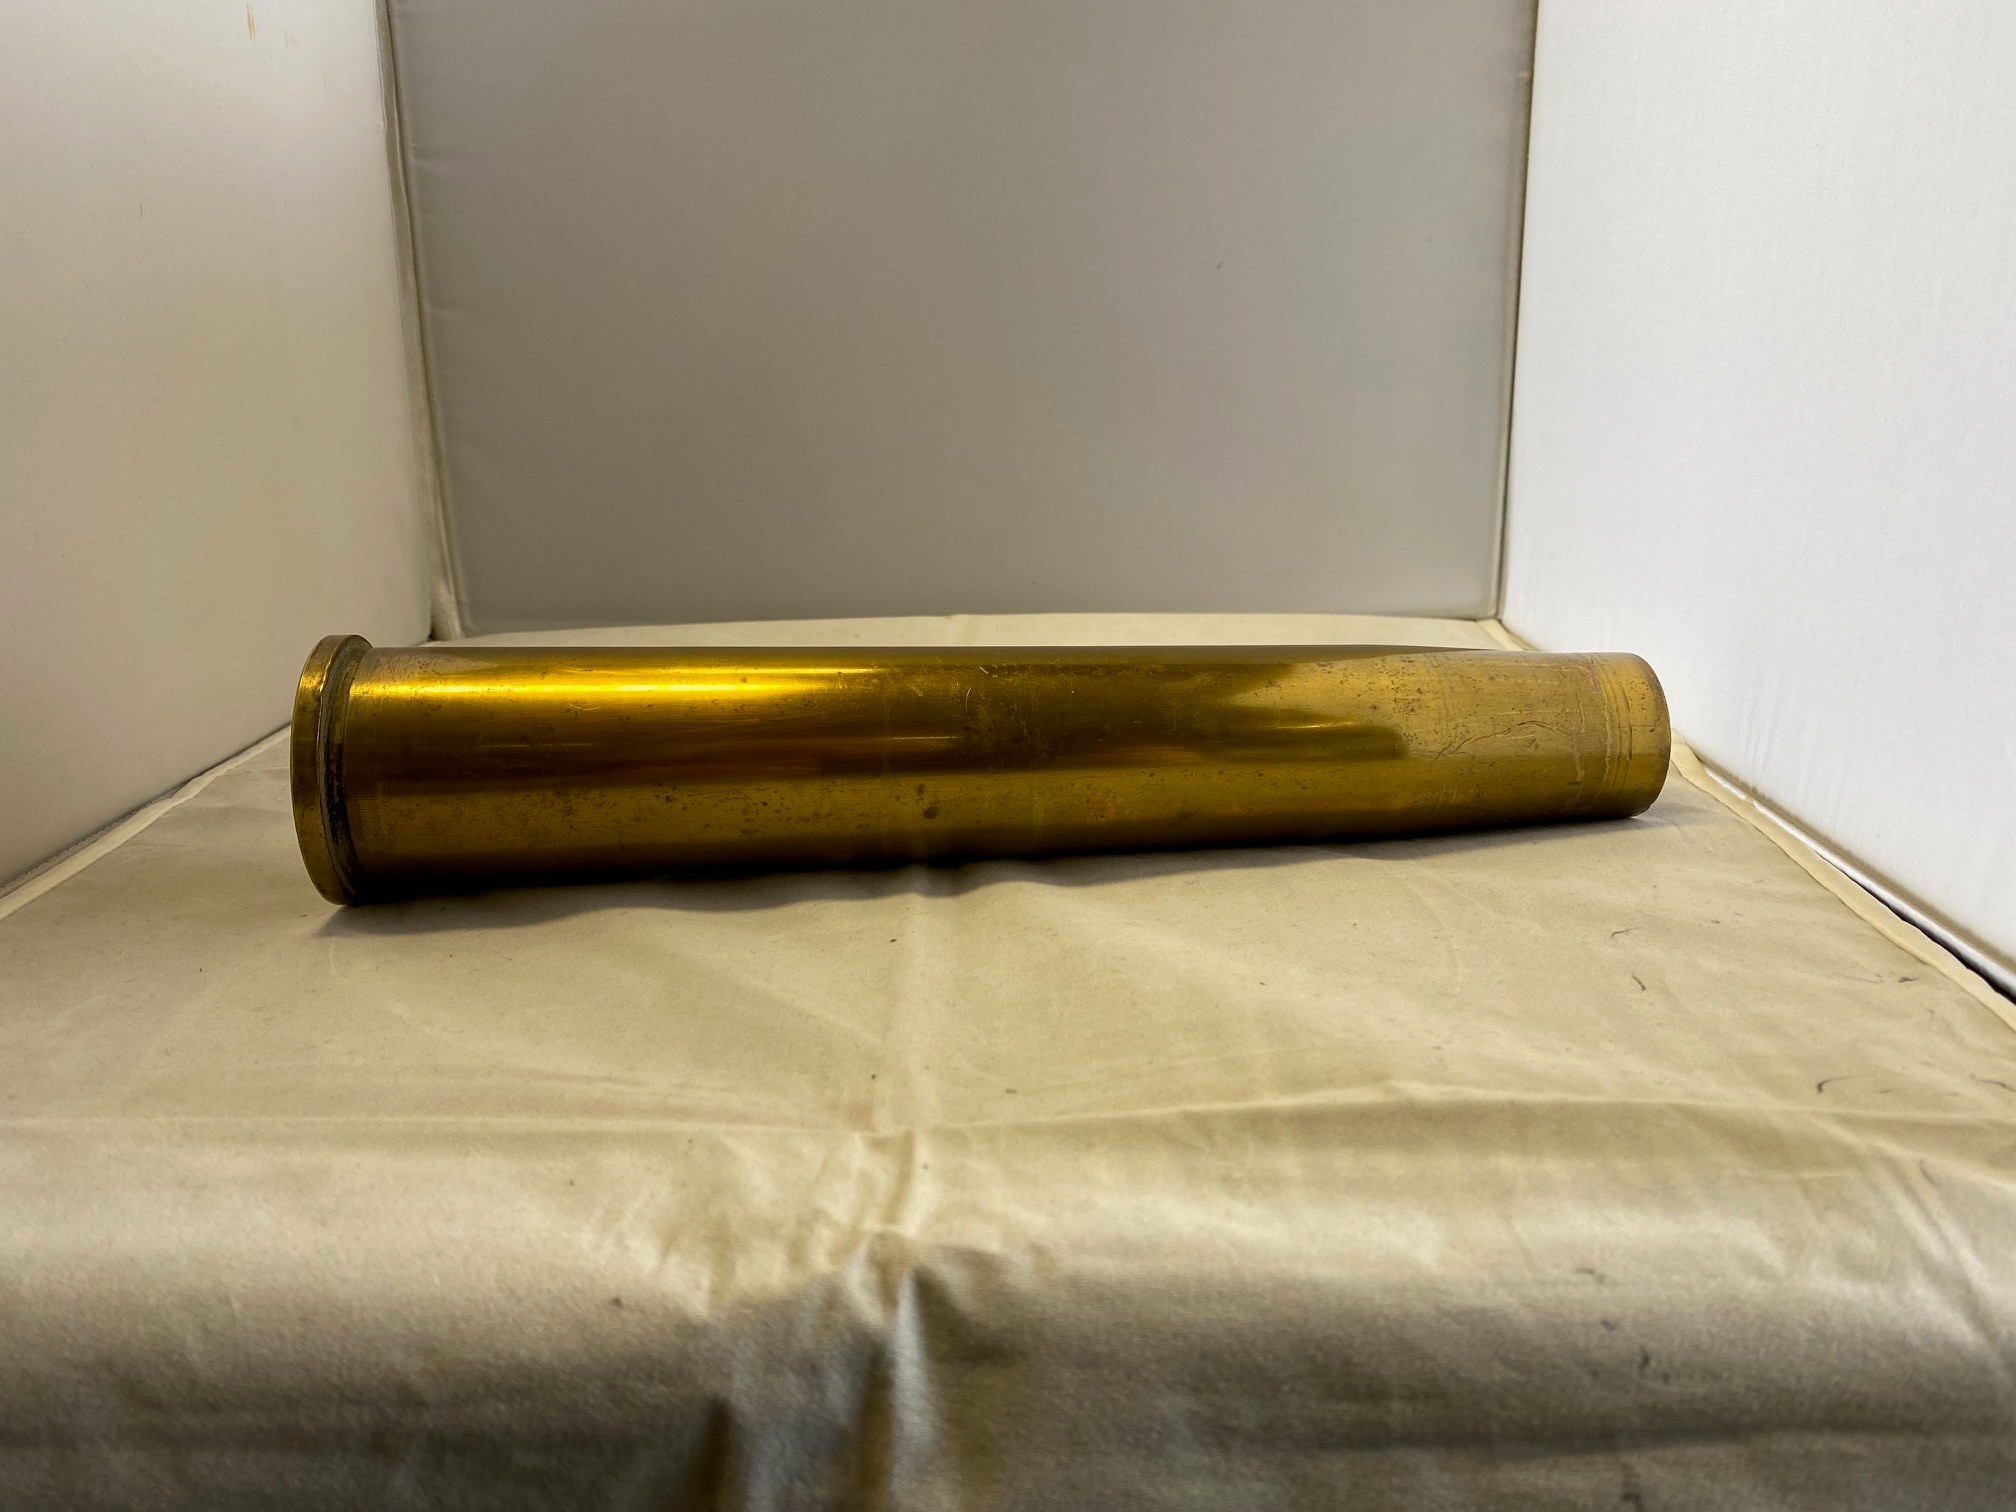 British army 40 mm brass shell mk 4